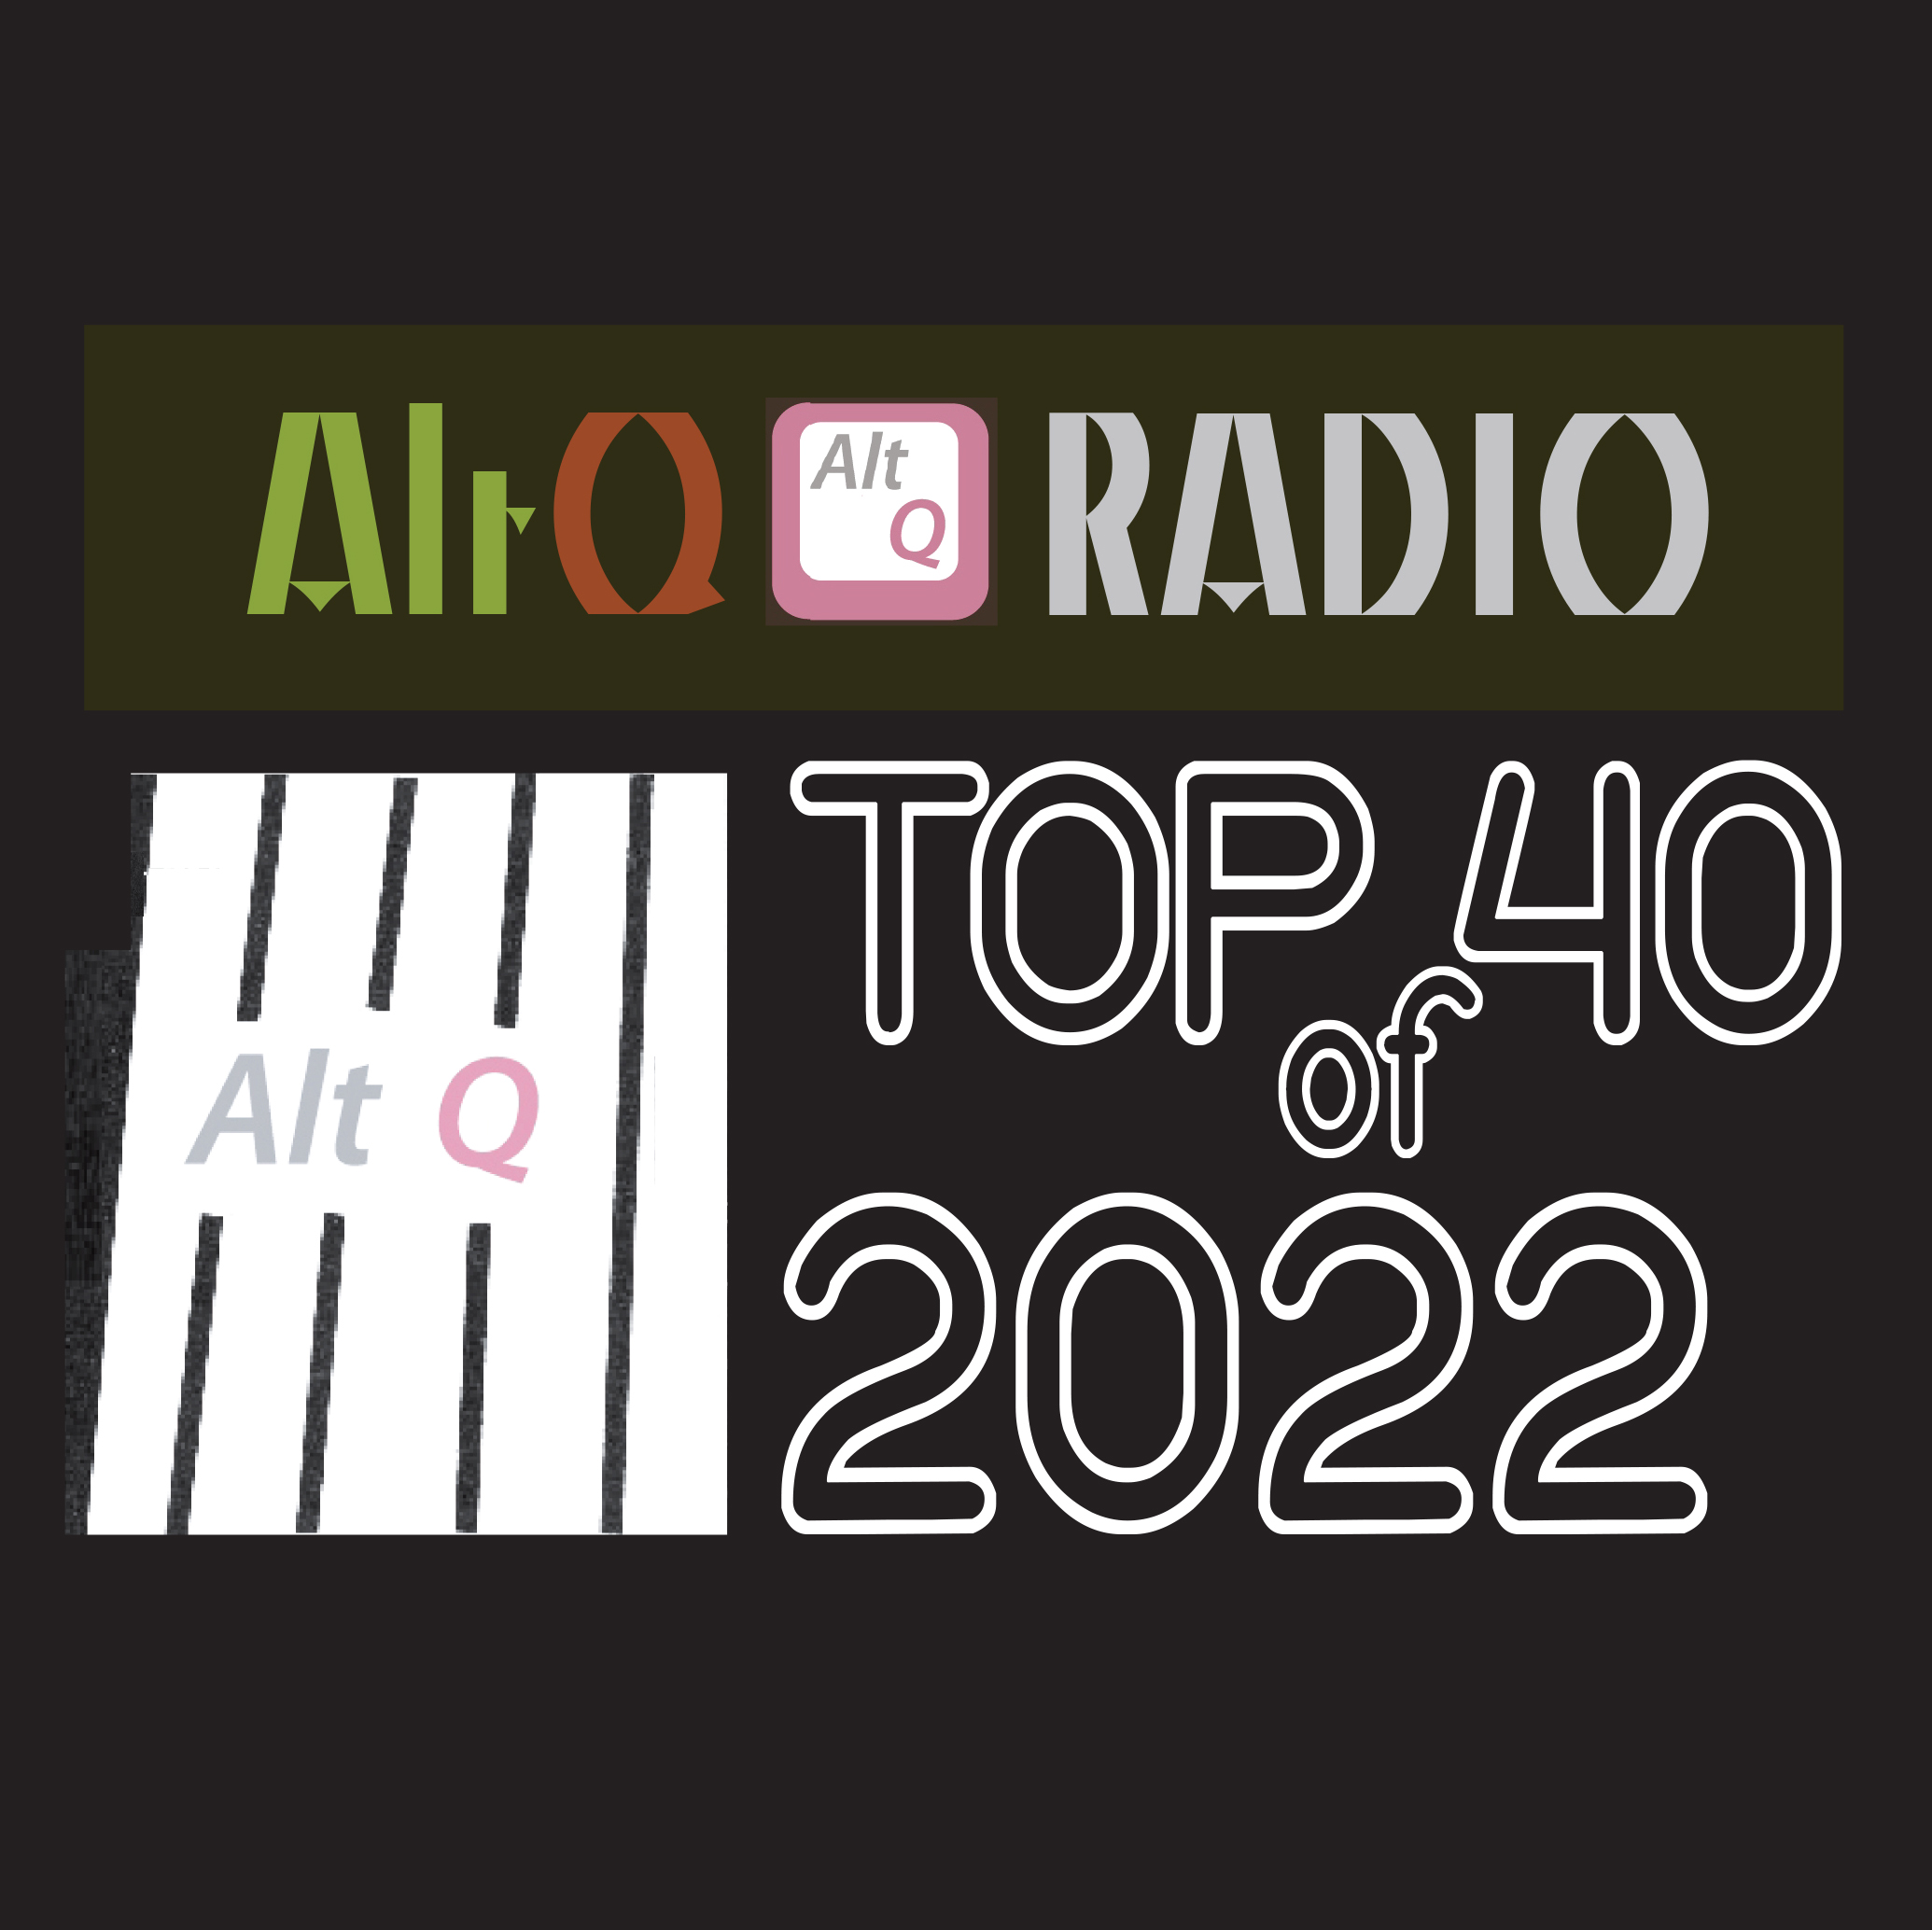 Art for AltQTop40-2022 03 by AltQTop40